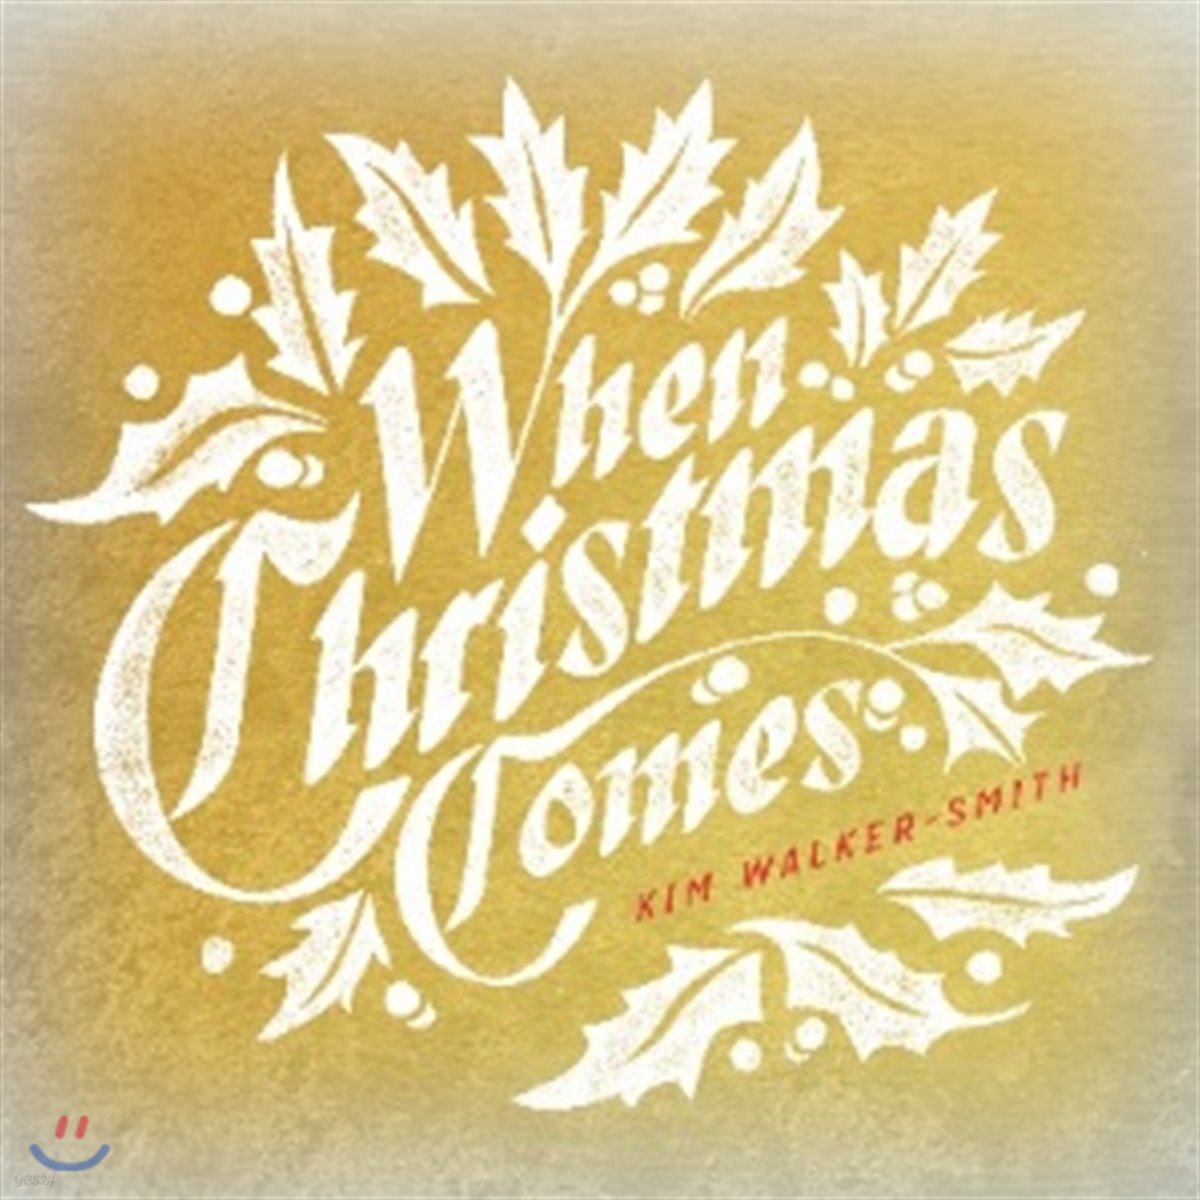 Kim Walker-Smith (킴 워커) - When Christmas Comes 크리스마스 워십앨범